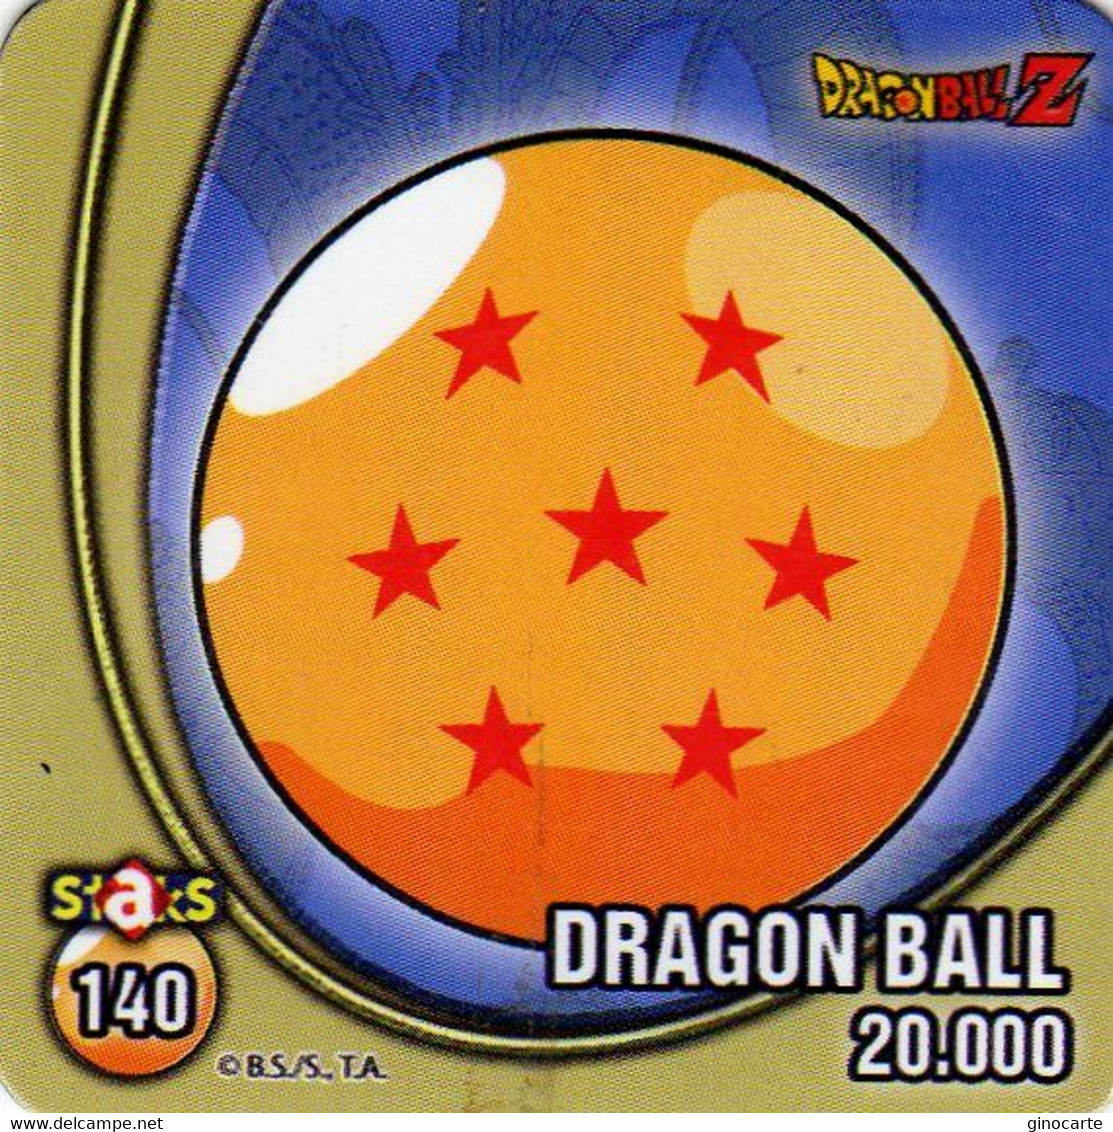 Magnets Magnet Stacks Dragon Ball Dragonball 140 - Personaggi